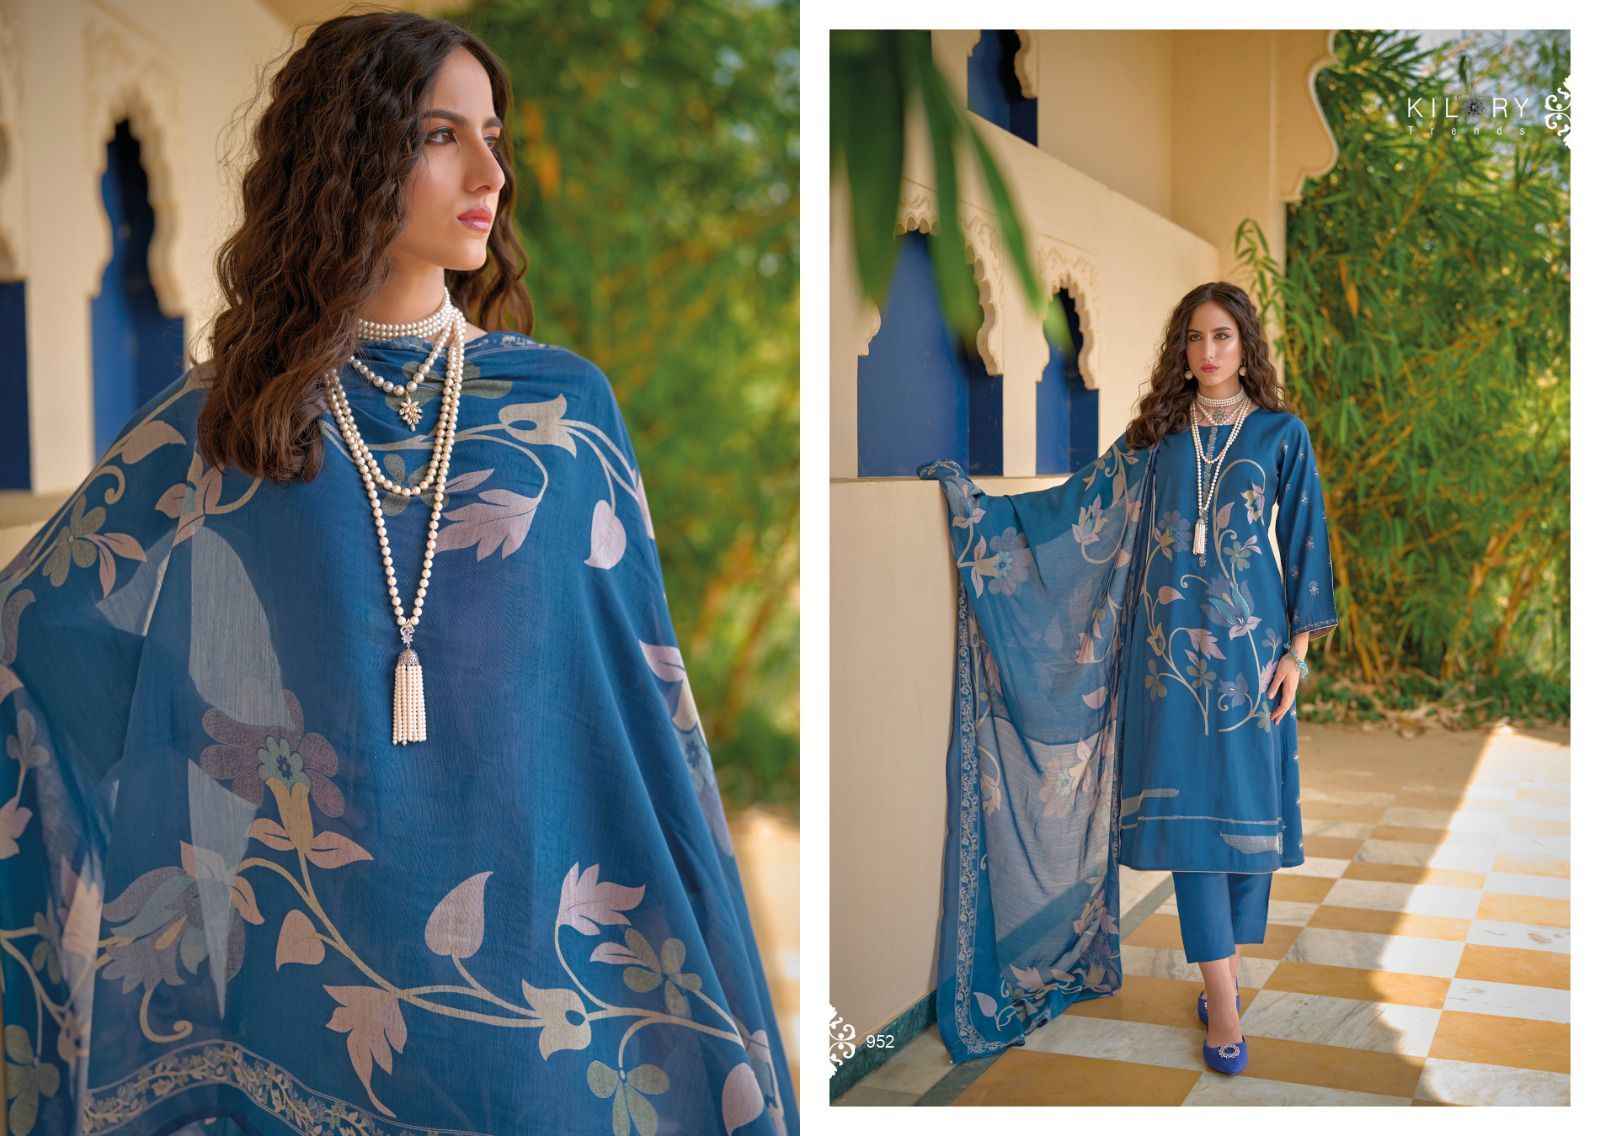 Kilory Trendz Zarina New Viscose Dress Material 8 pcs Catalogue